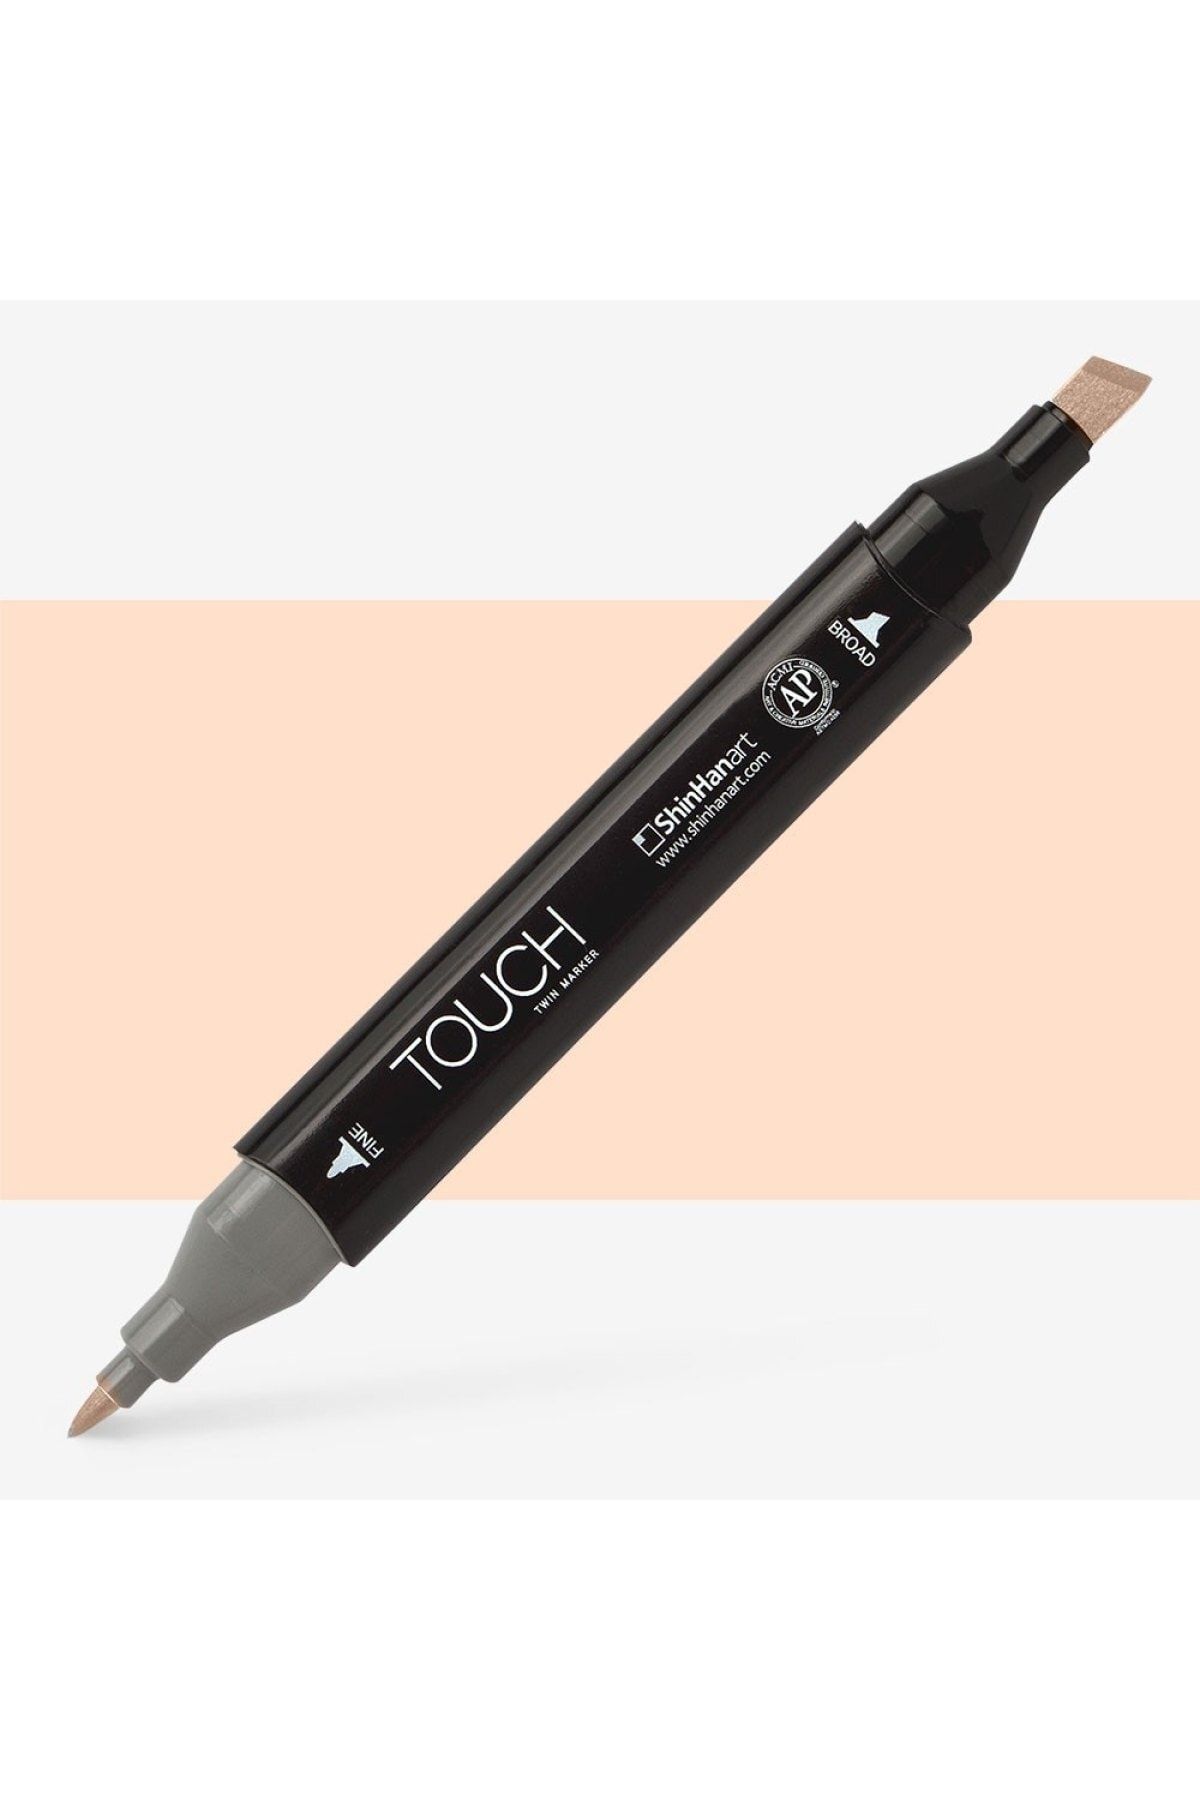 Shinhan Art Touch Twin Marker Pen : Çift Uçlu Marker Kalemi : Powder Pınk : Yr27